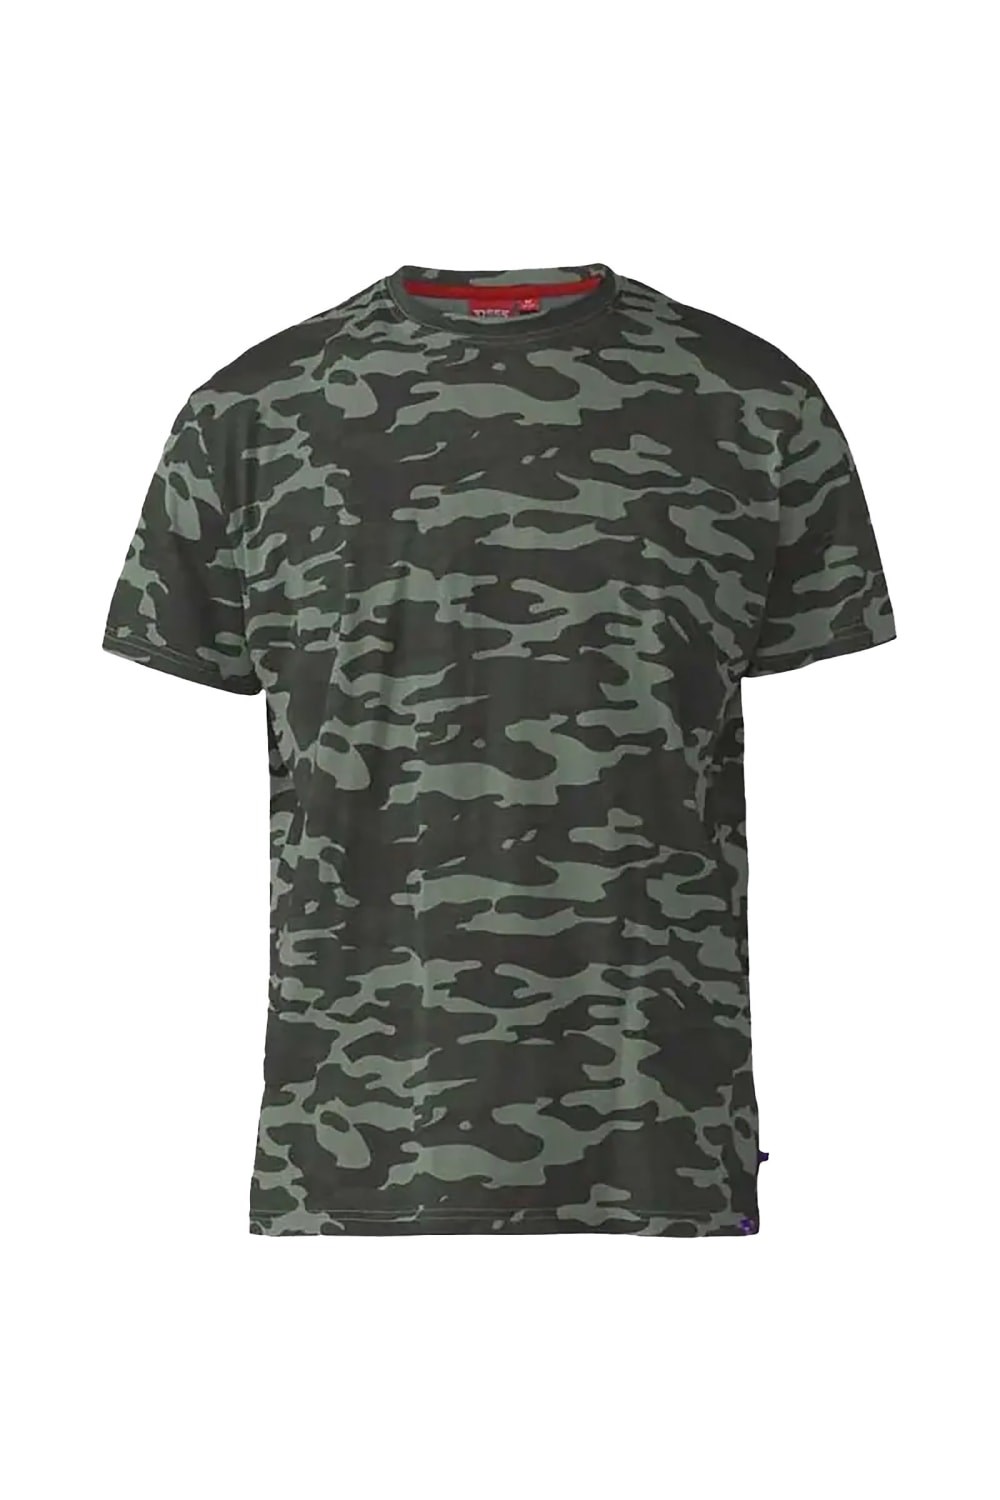 Gaston Mens Kingsize Camouflage T-Shirt -